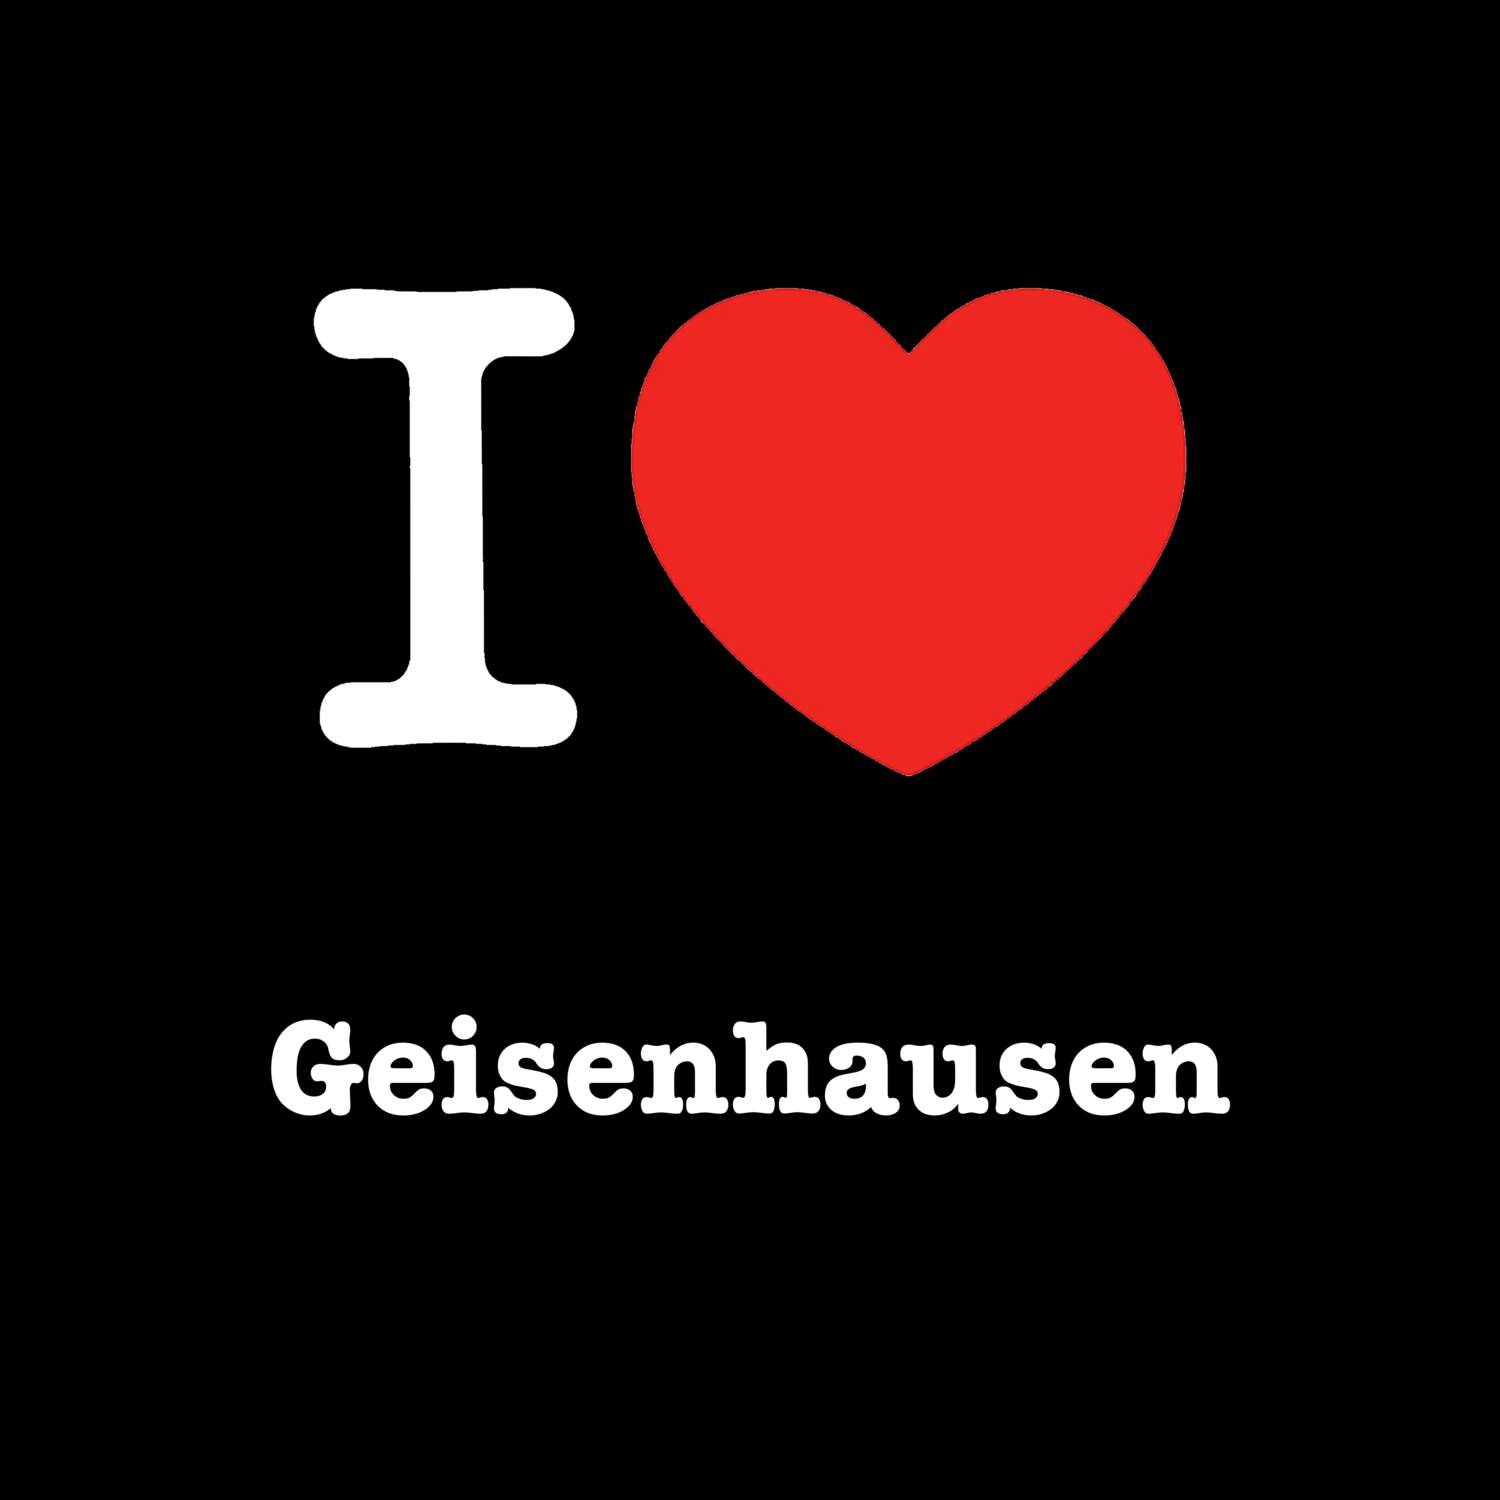 Geisenhausen T-Shirt »I love«